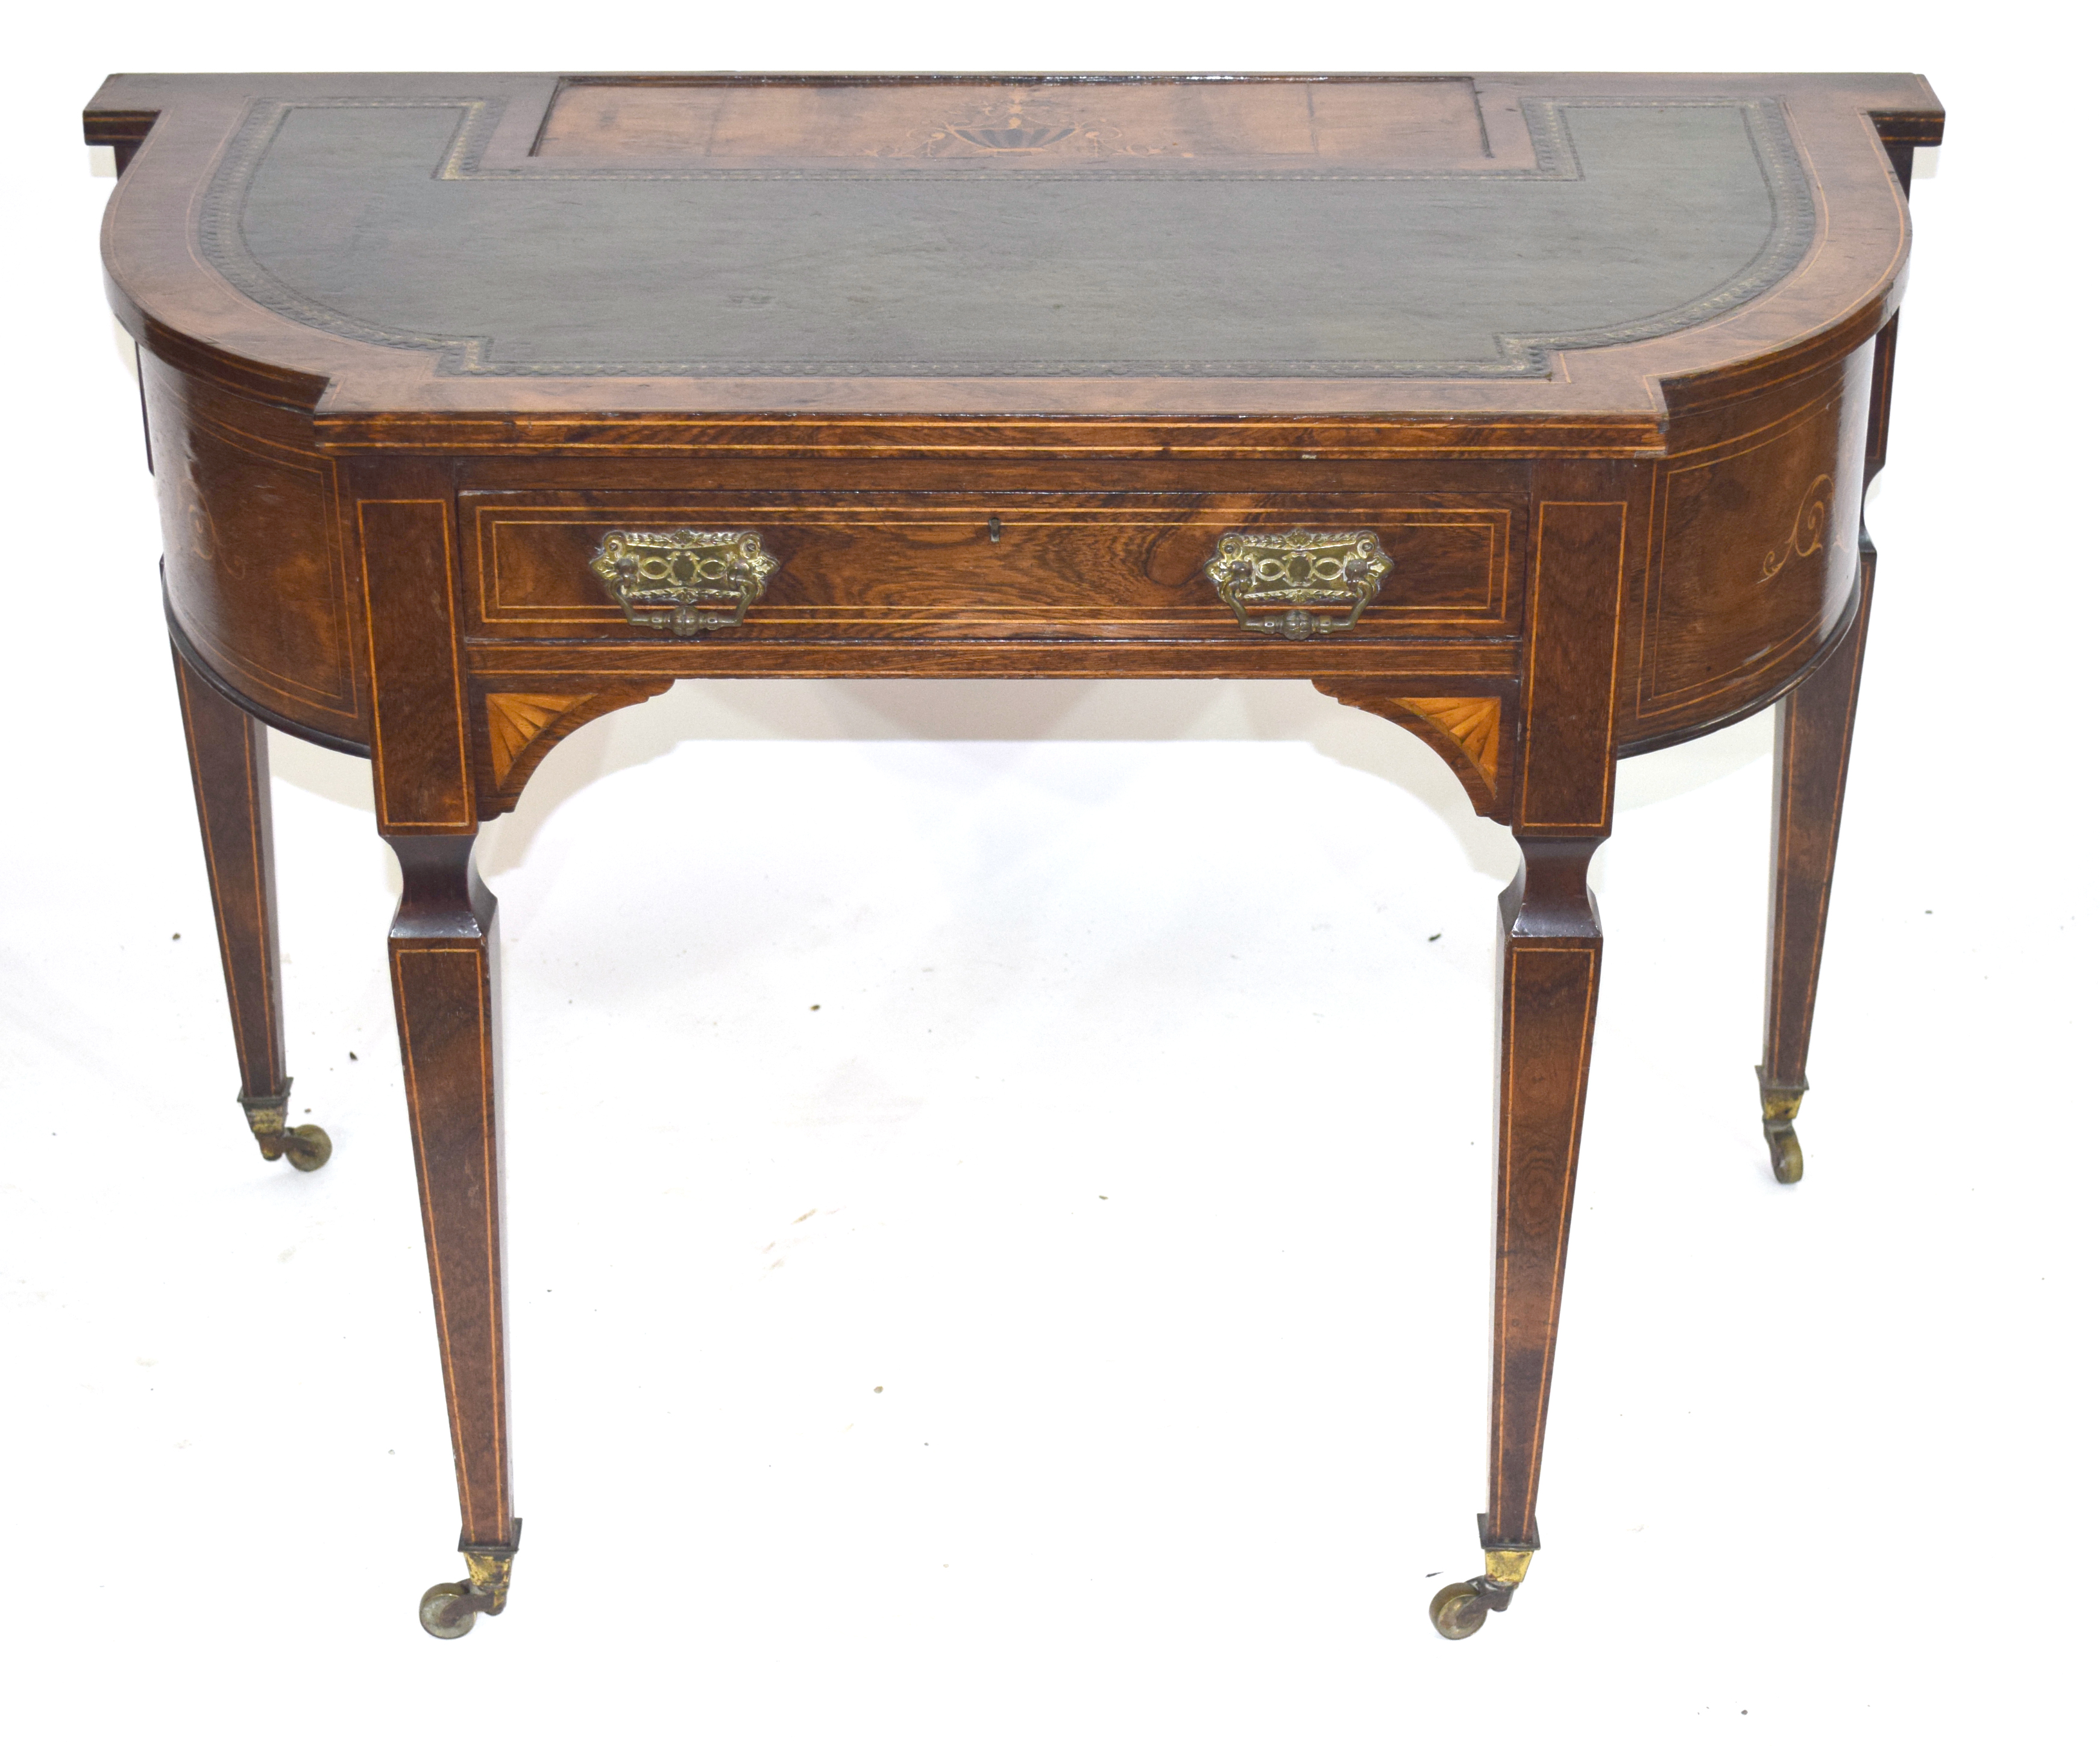 Late 19th century walnut veneered writing desk - Image 2 of 8